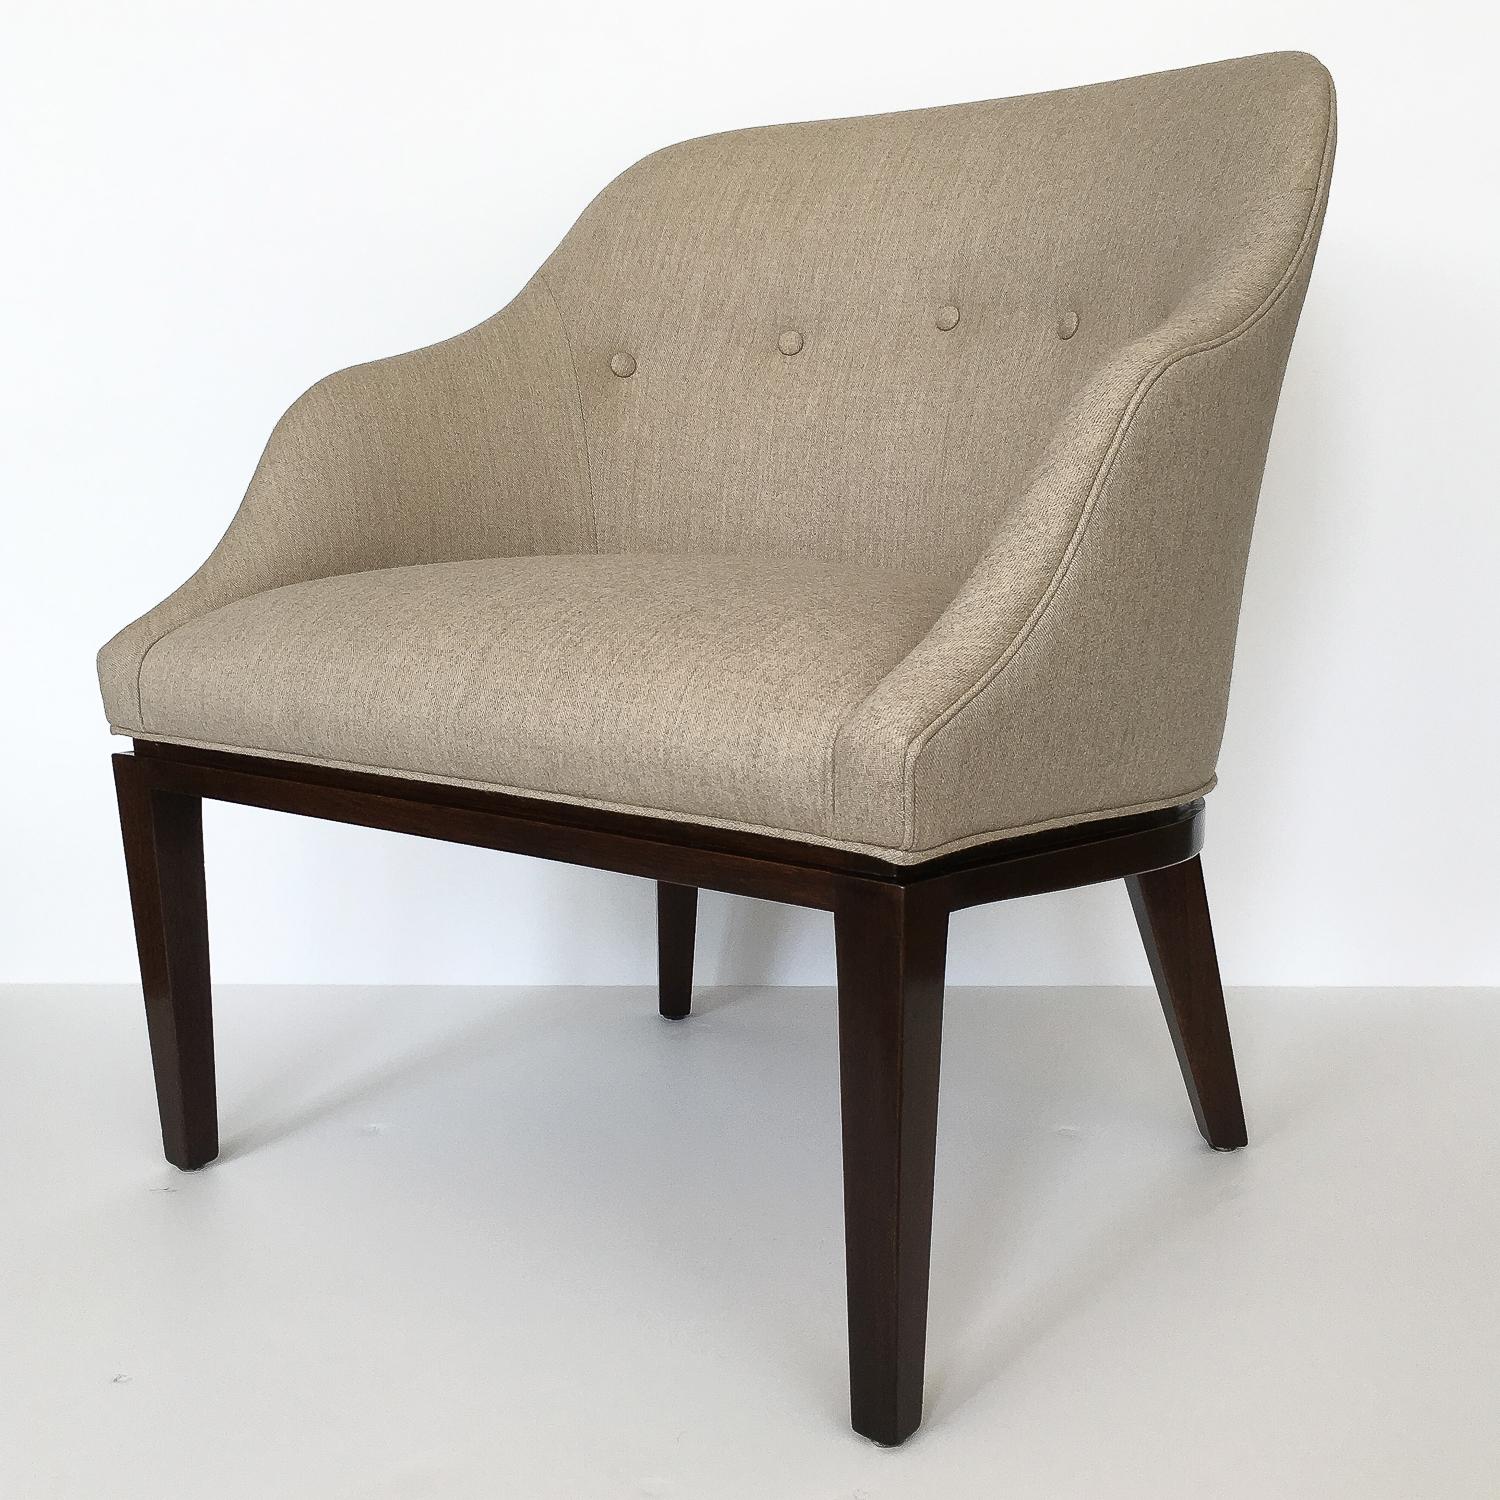 American Edward Wormley Lounge Chair for Dunbar